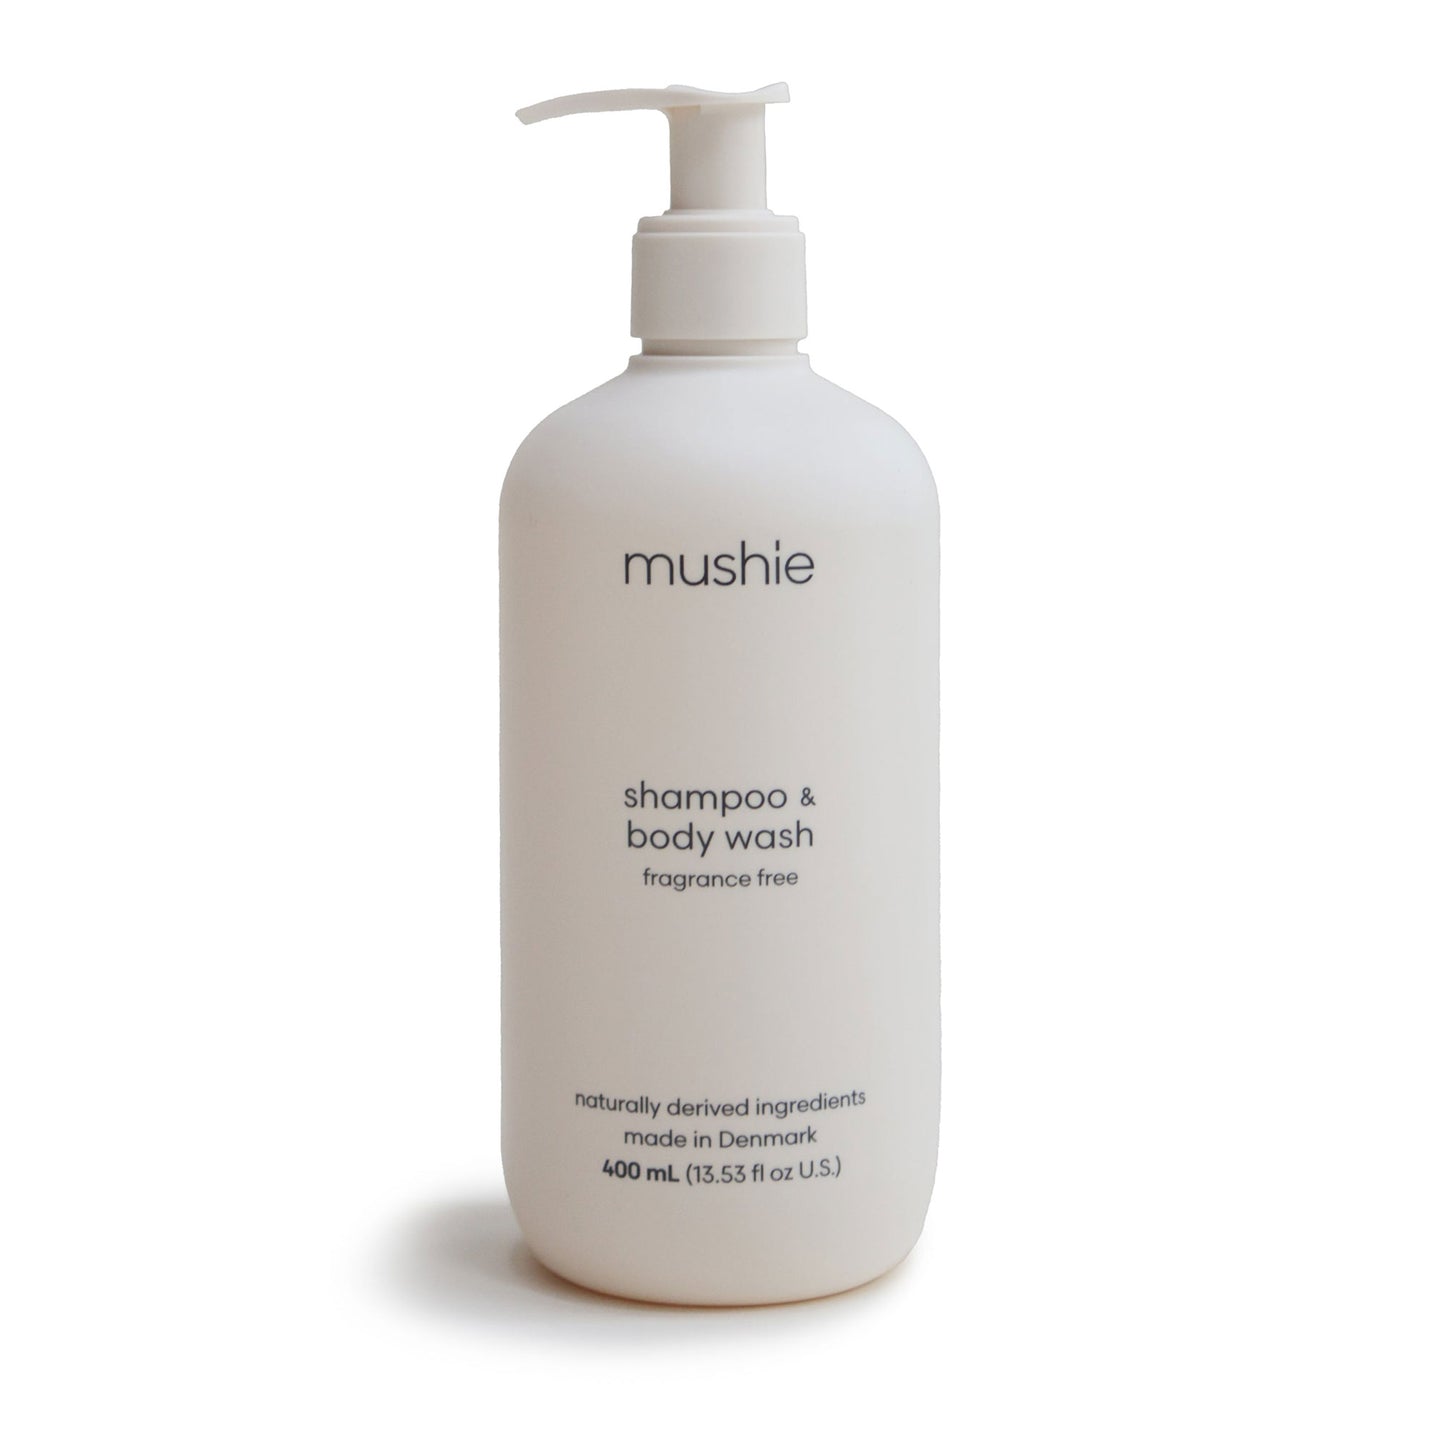 Mushie Baby Shampoo & Body Wash - 400 mL - Fragrance Free